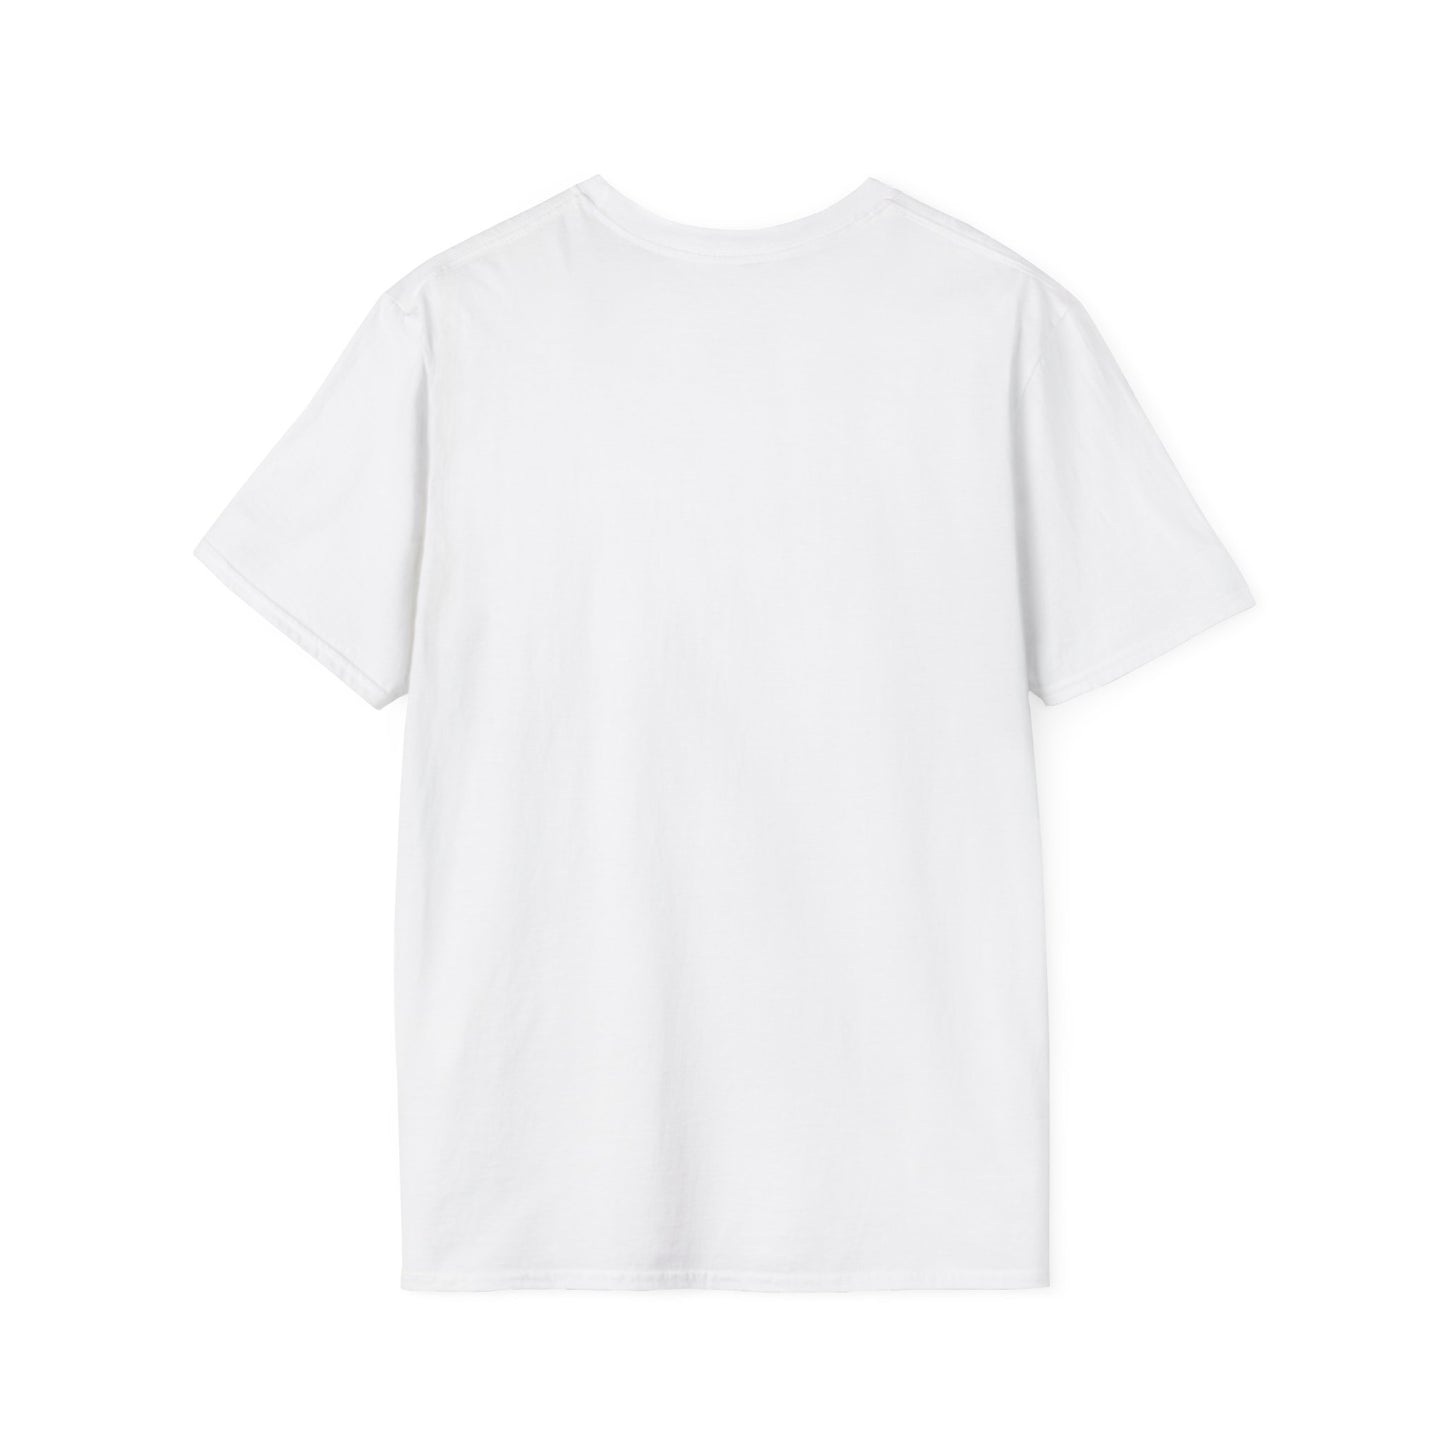 Unisex Softstyle T-Shirt - My USA - Indiana, Idaho, Georgia, Florida, Connecticut, Alabama, Minnesota, California, Arkansas, Arizona, Alaska